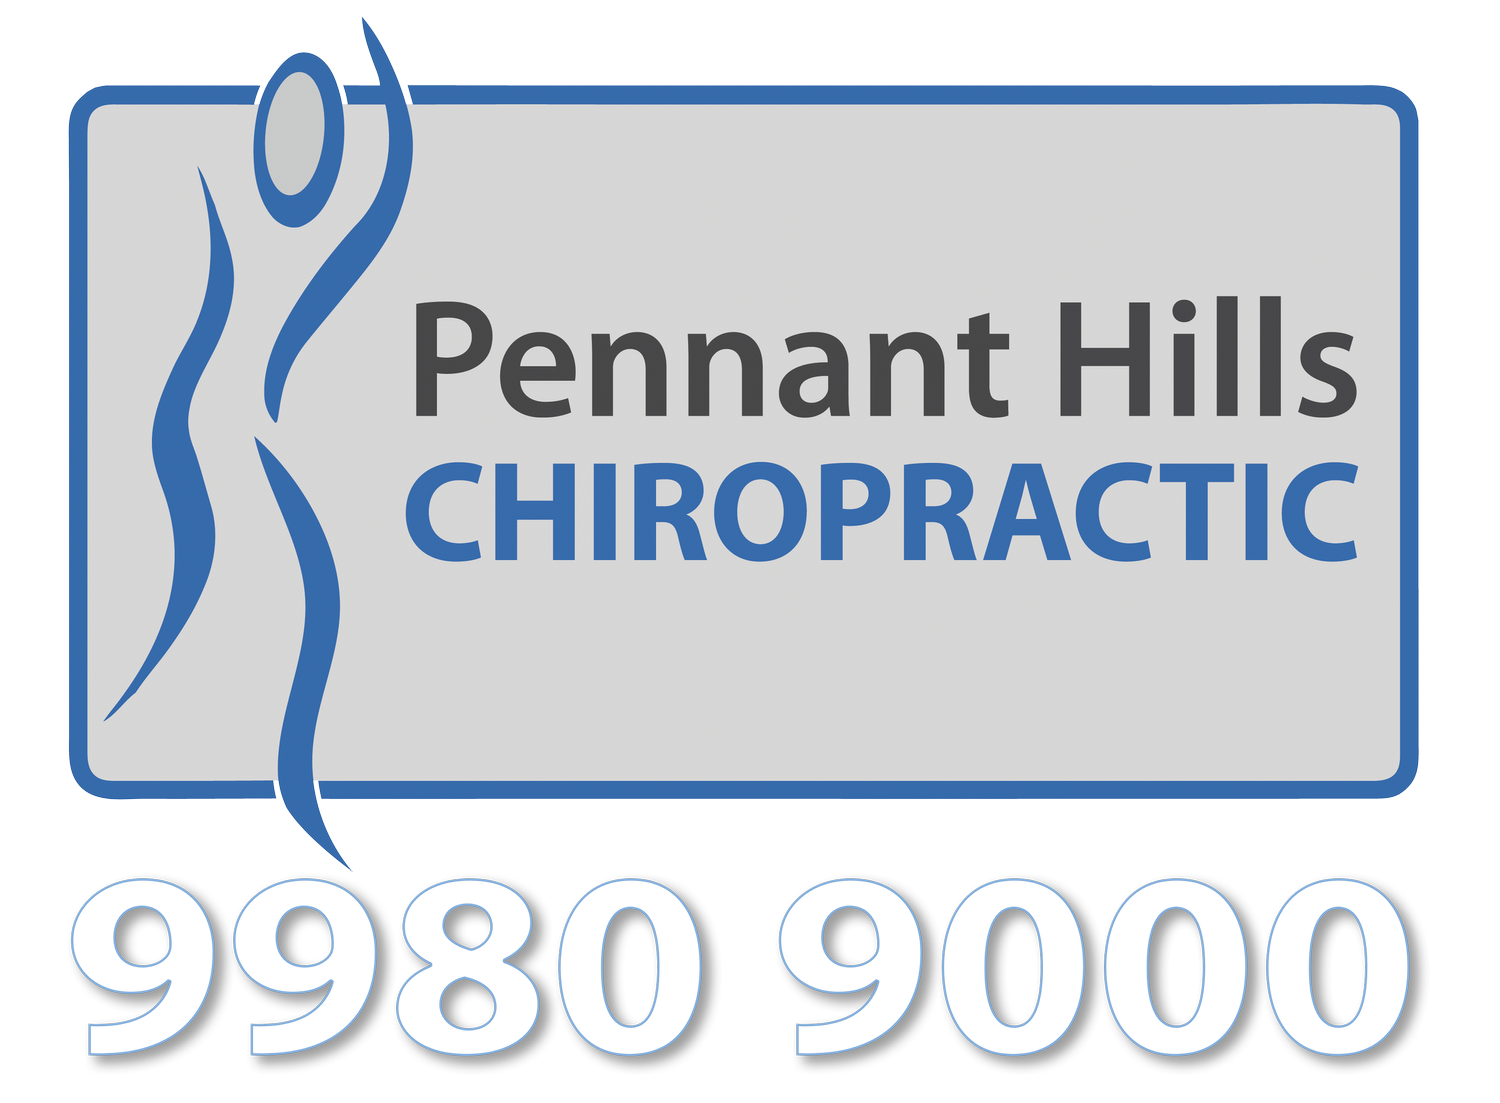 Pennant Hills Chiropractic